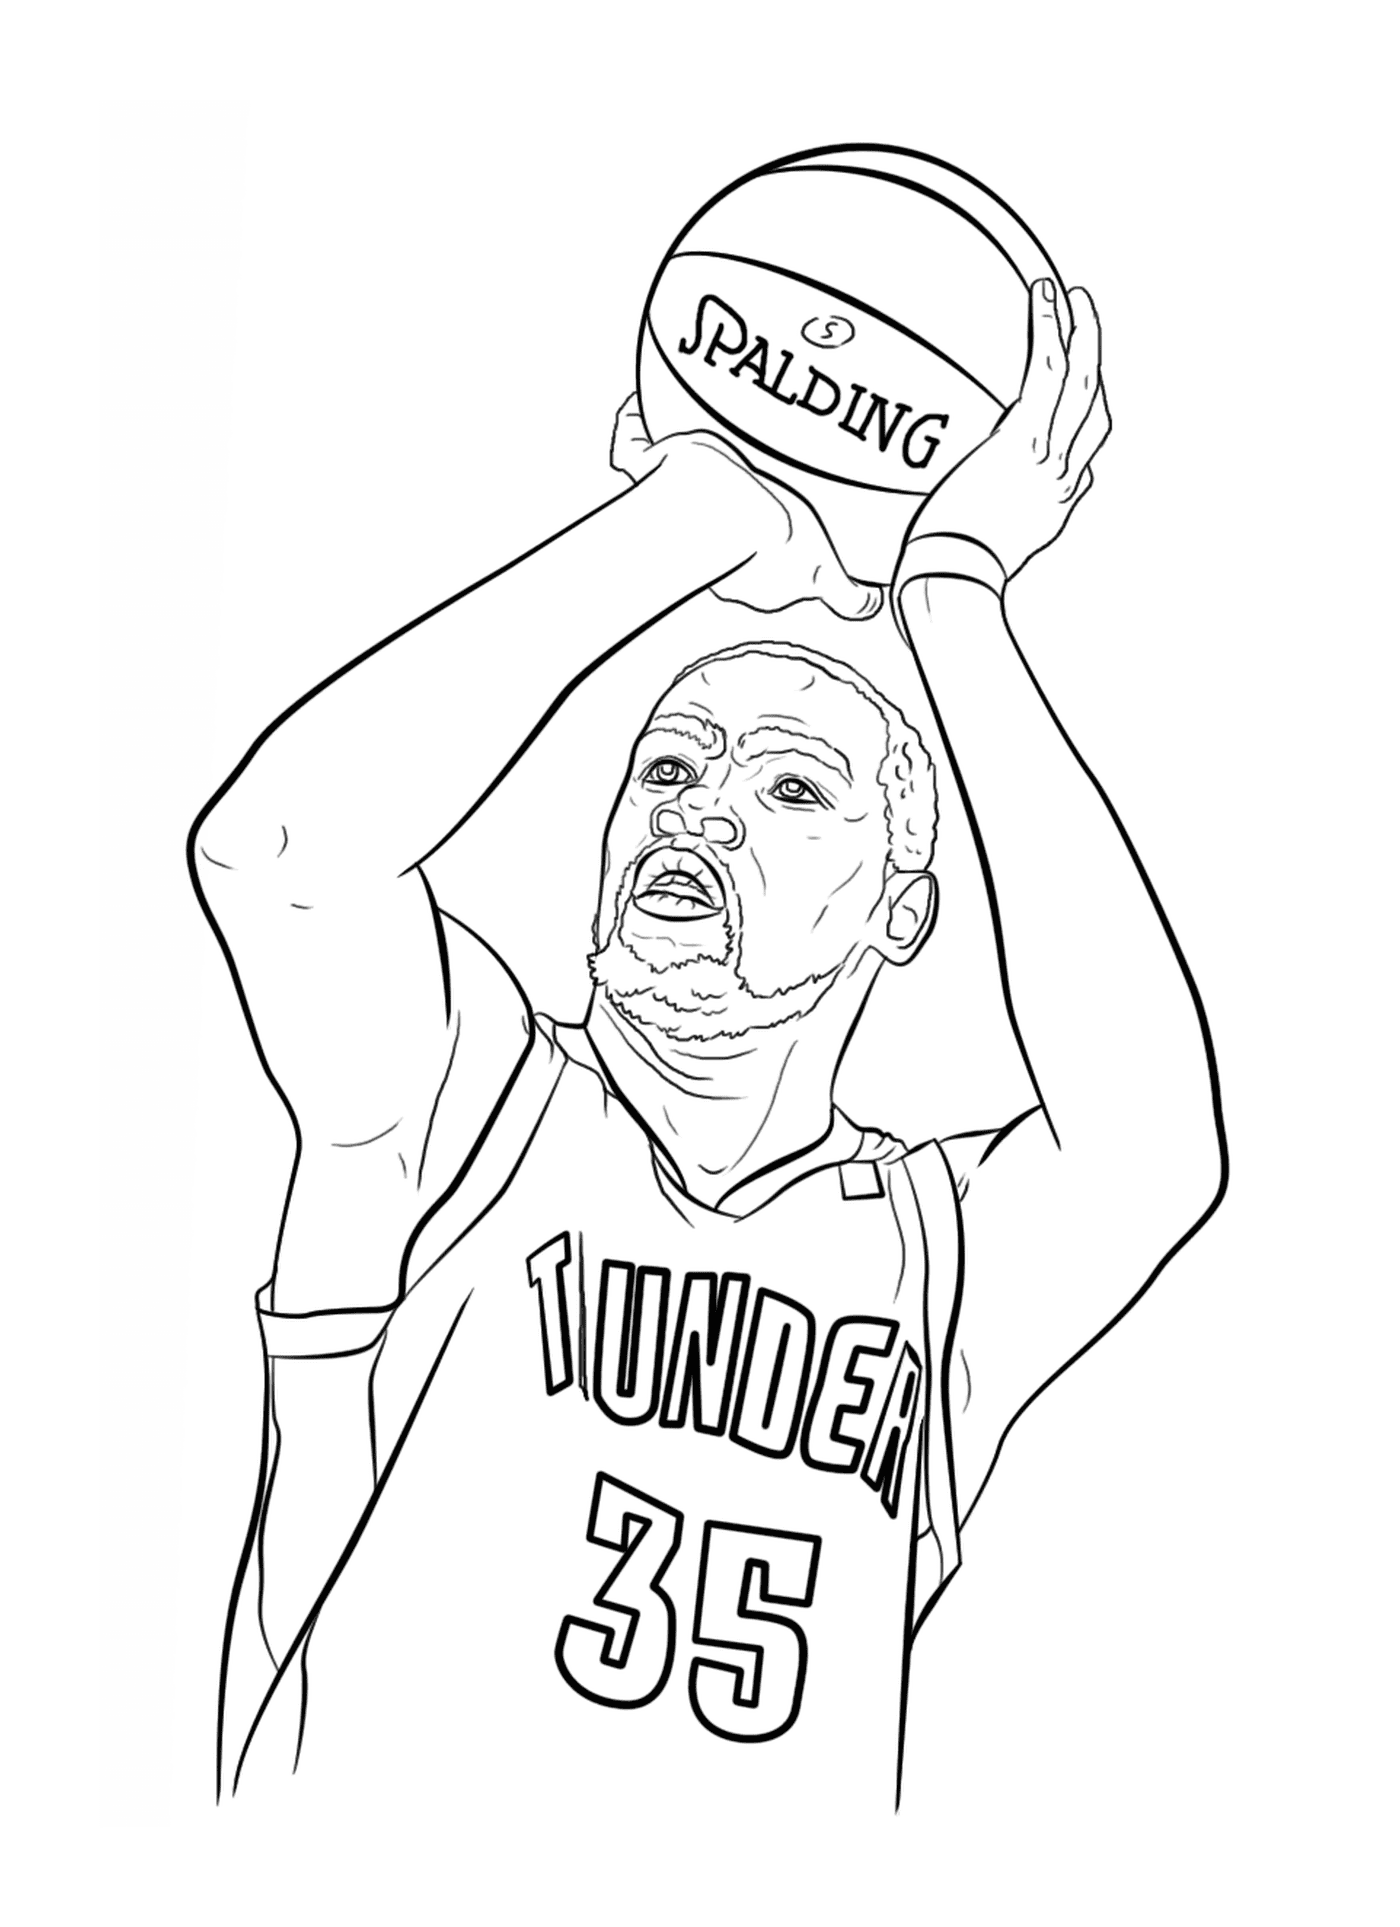  Kevin Durant,篮球运动员 